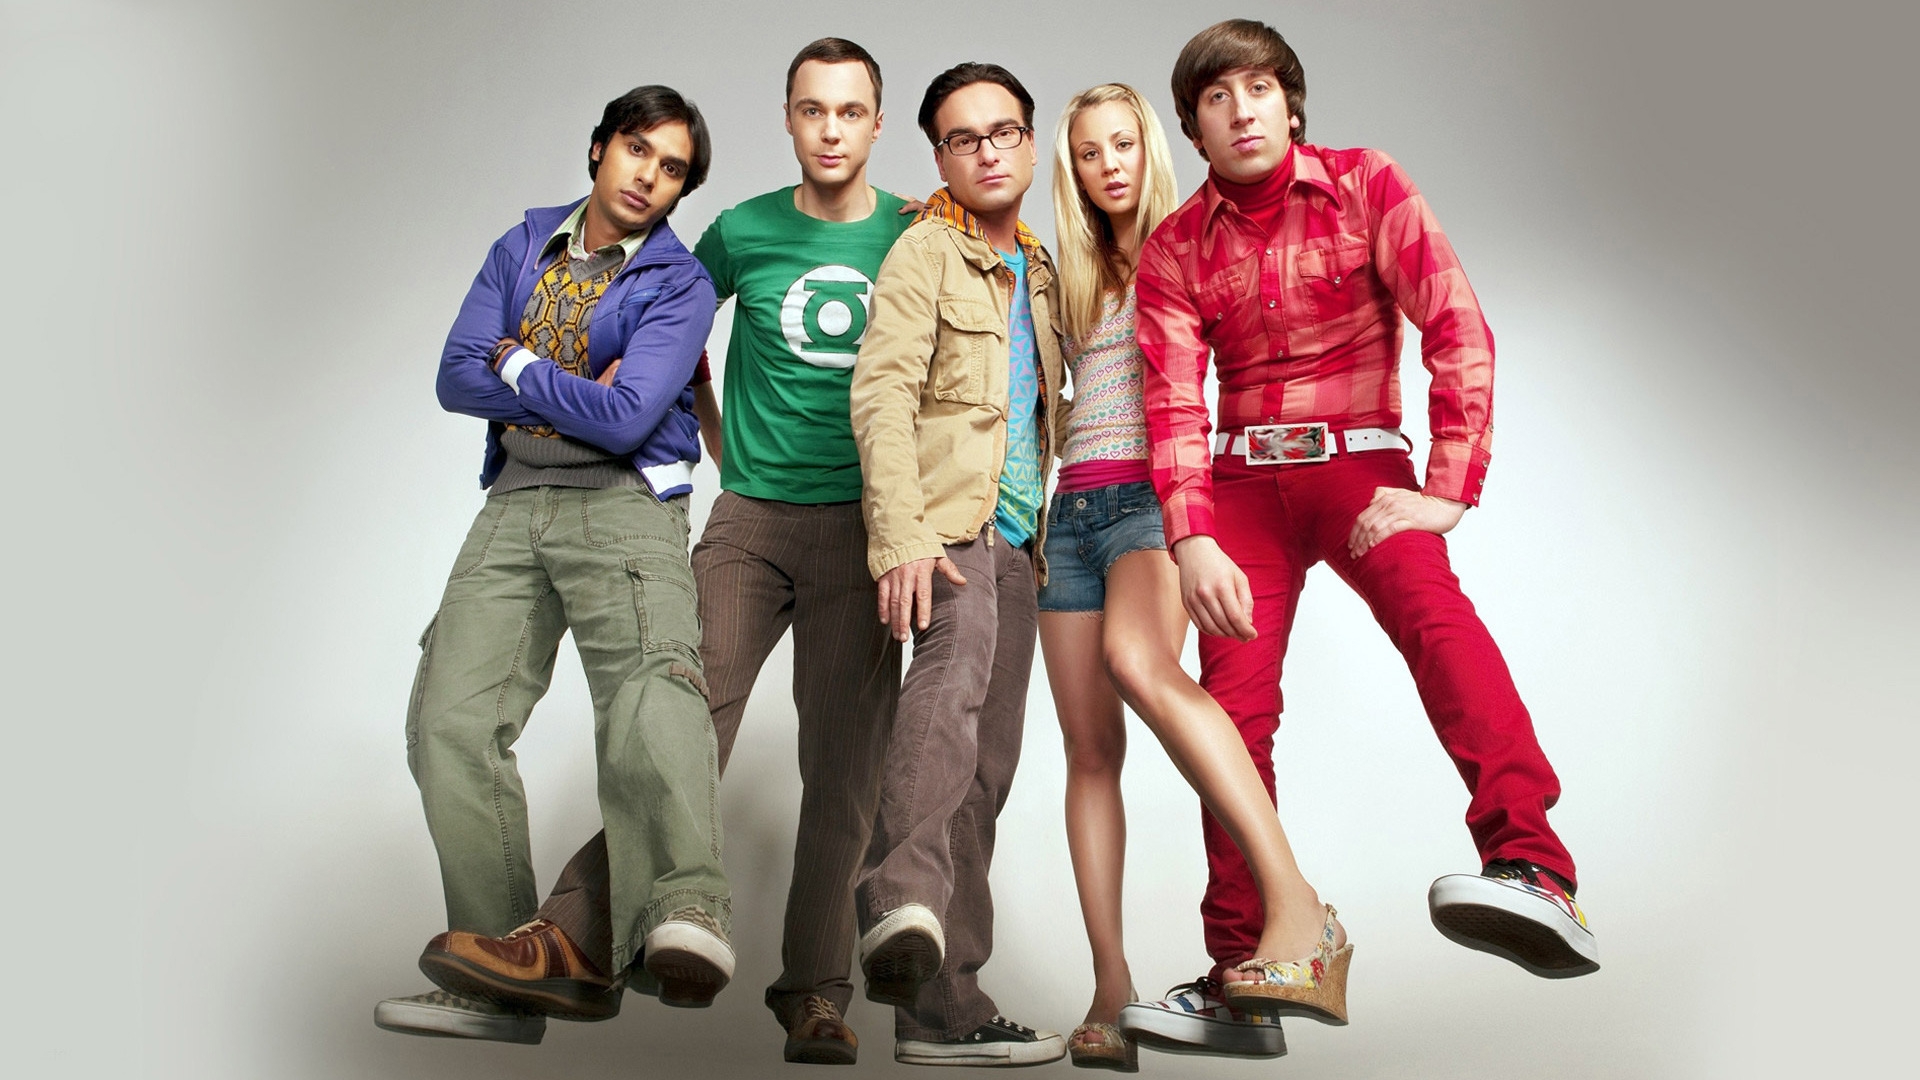 The Big Bang Theory New Season for 1920 x 1080 HDTV 1080p resolution